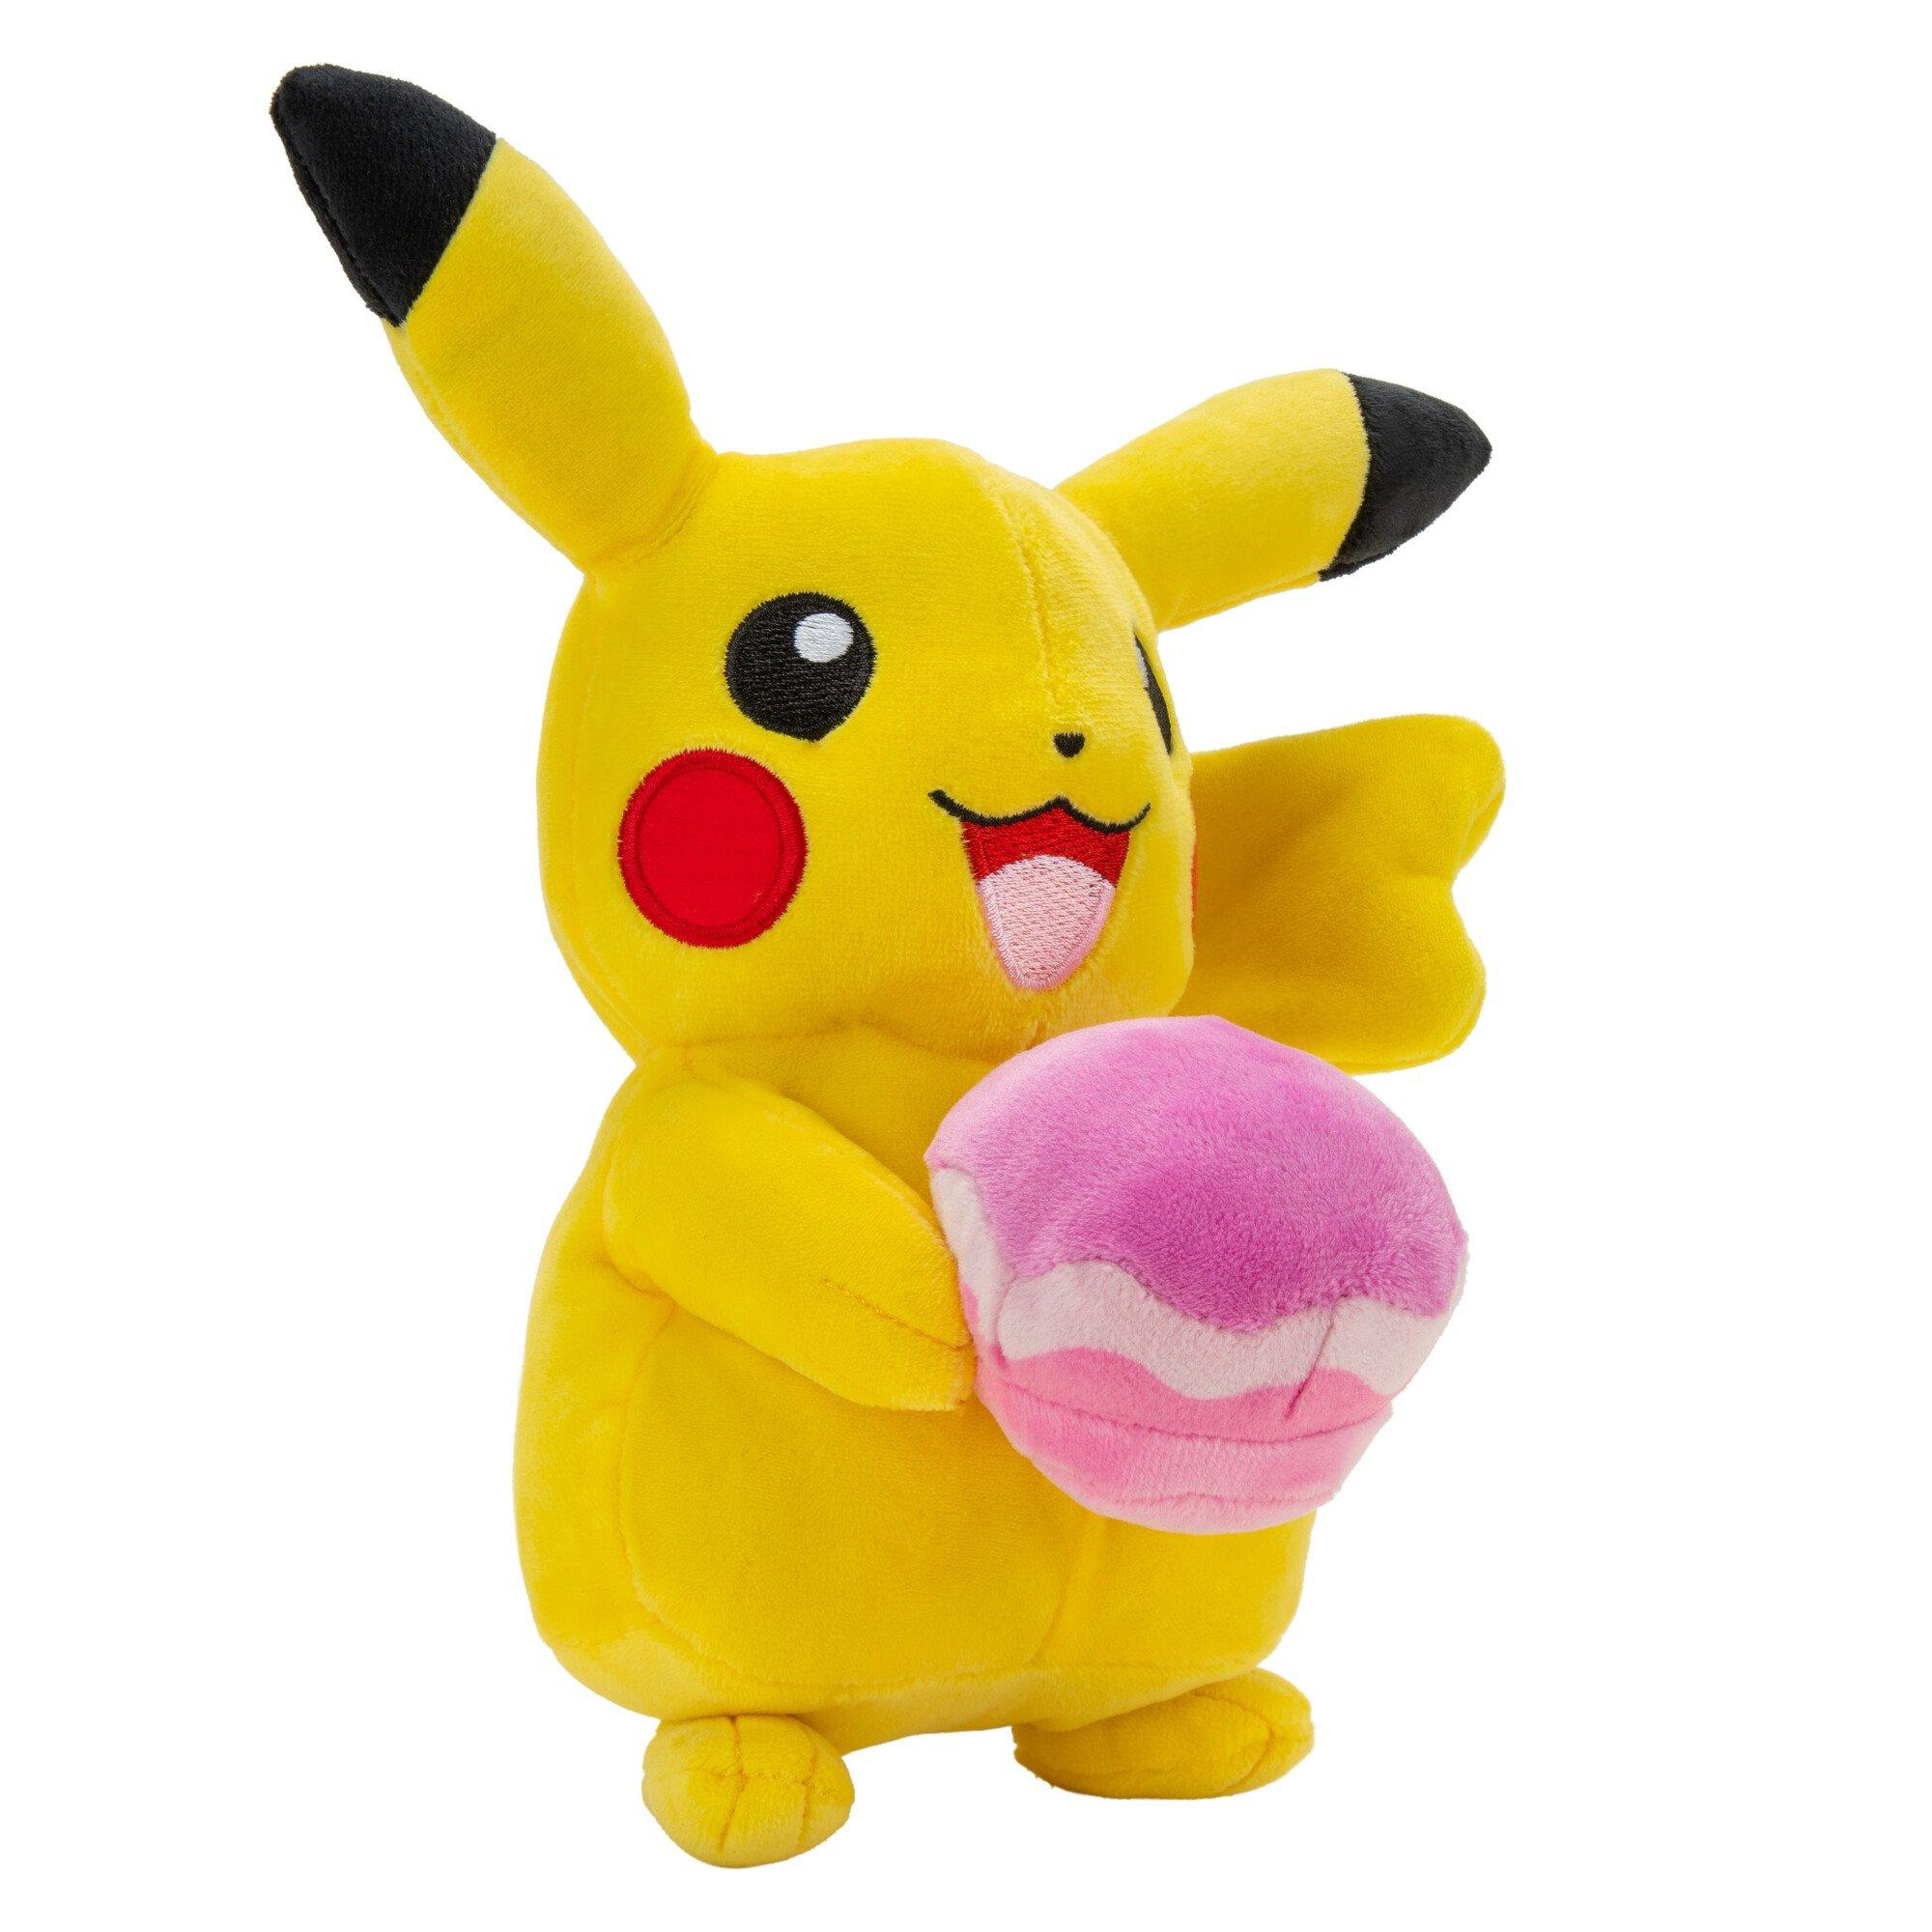 https://media.gamestop.com/i/gamestop/11162394_ALT01/Jazwares-Pokemon-Pikachu-8-in-Plush-with-Poke-Puff?$pdp$